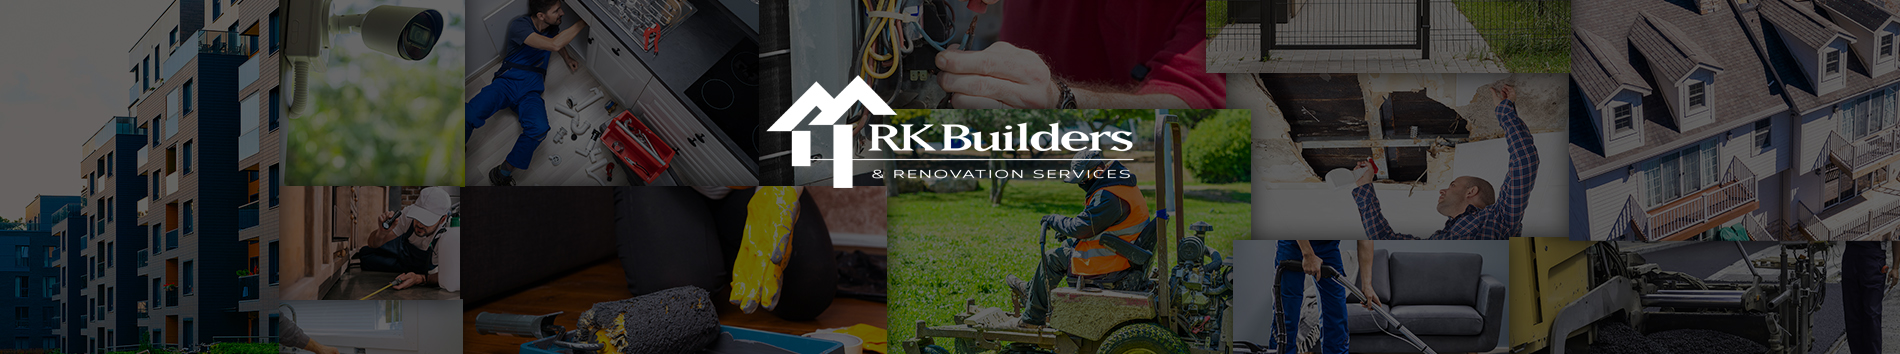 RK Builders & Renovation Services